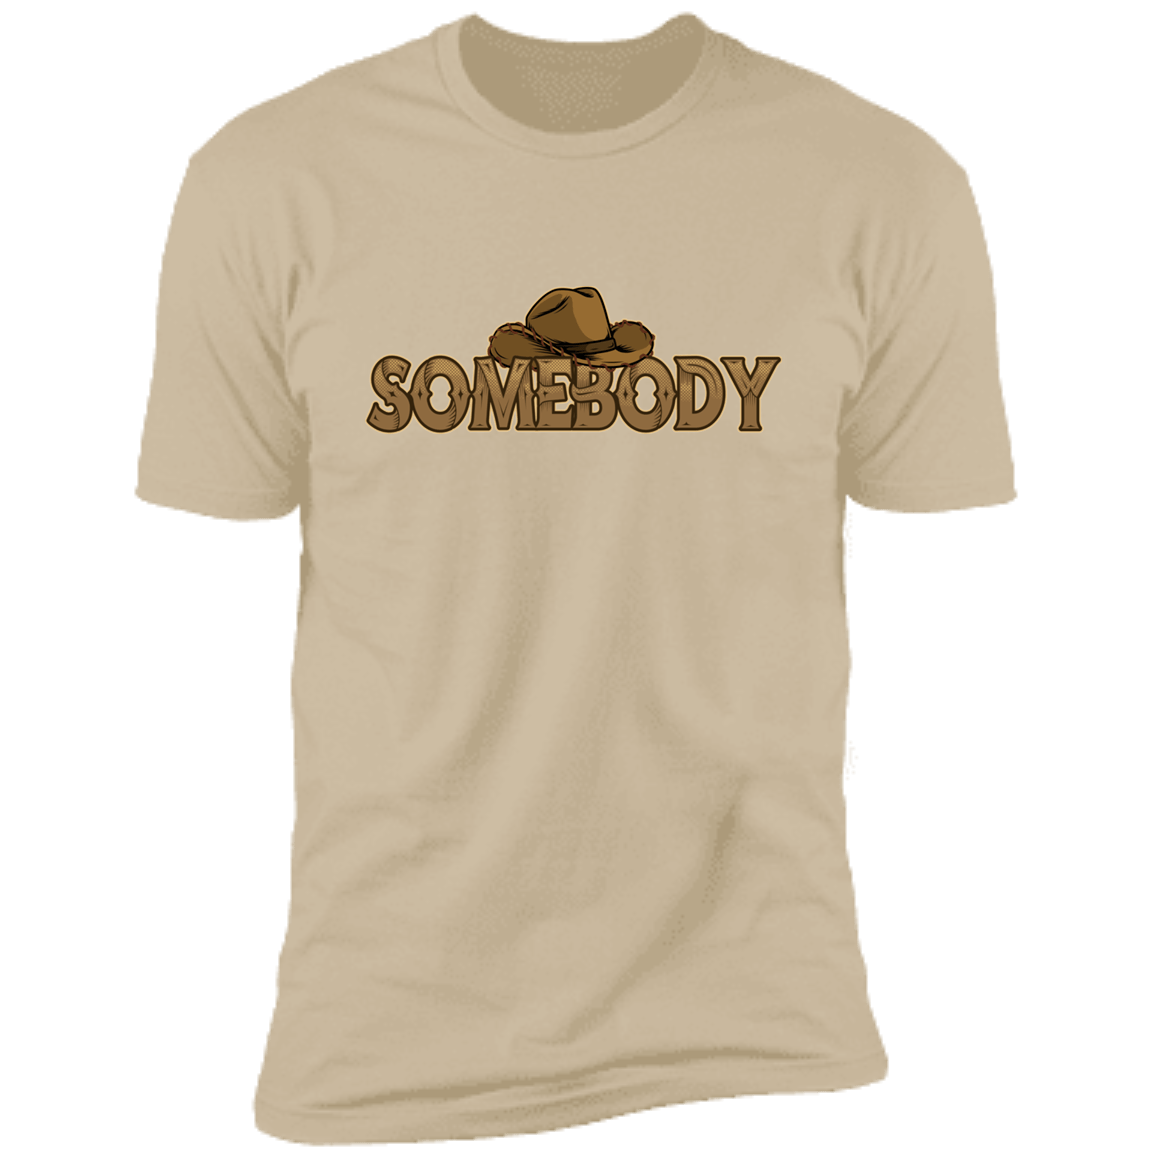 Somebody&#39;s Problem &amp; Somebody Deluxe Soft Cream Shirts